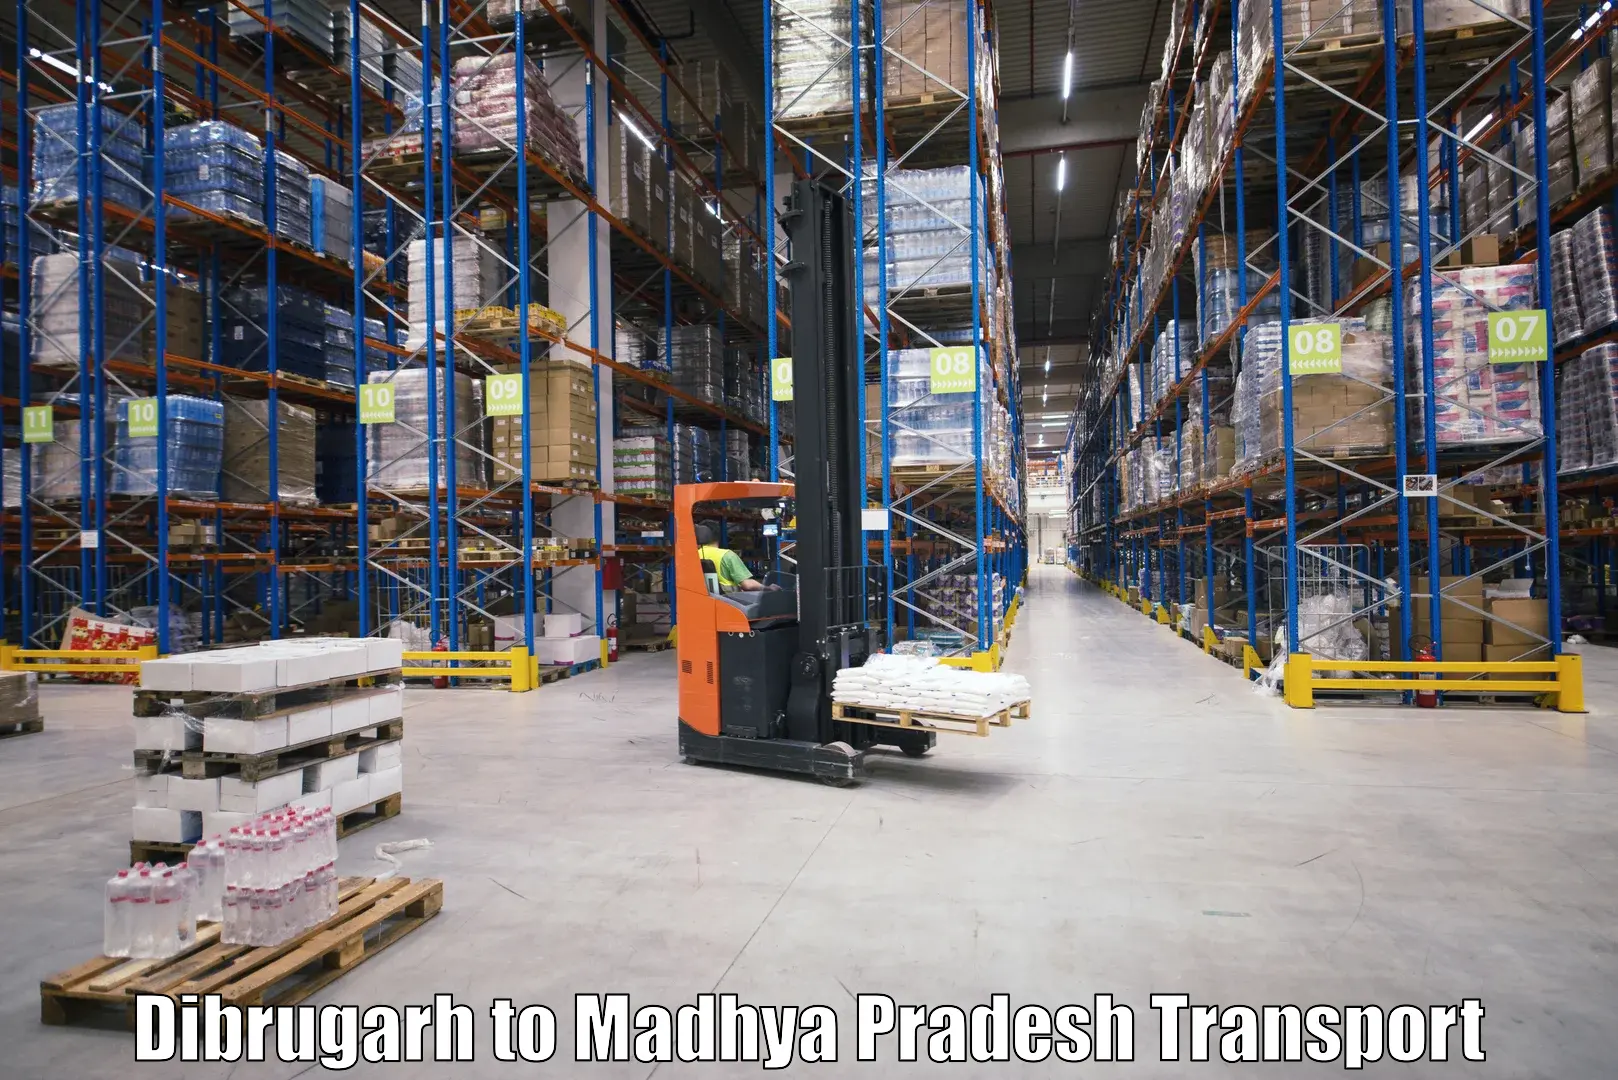 Shipping partner Dibrugarh to Tikamgarh